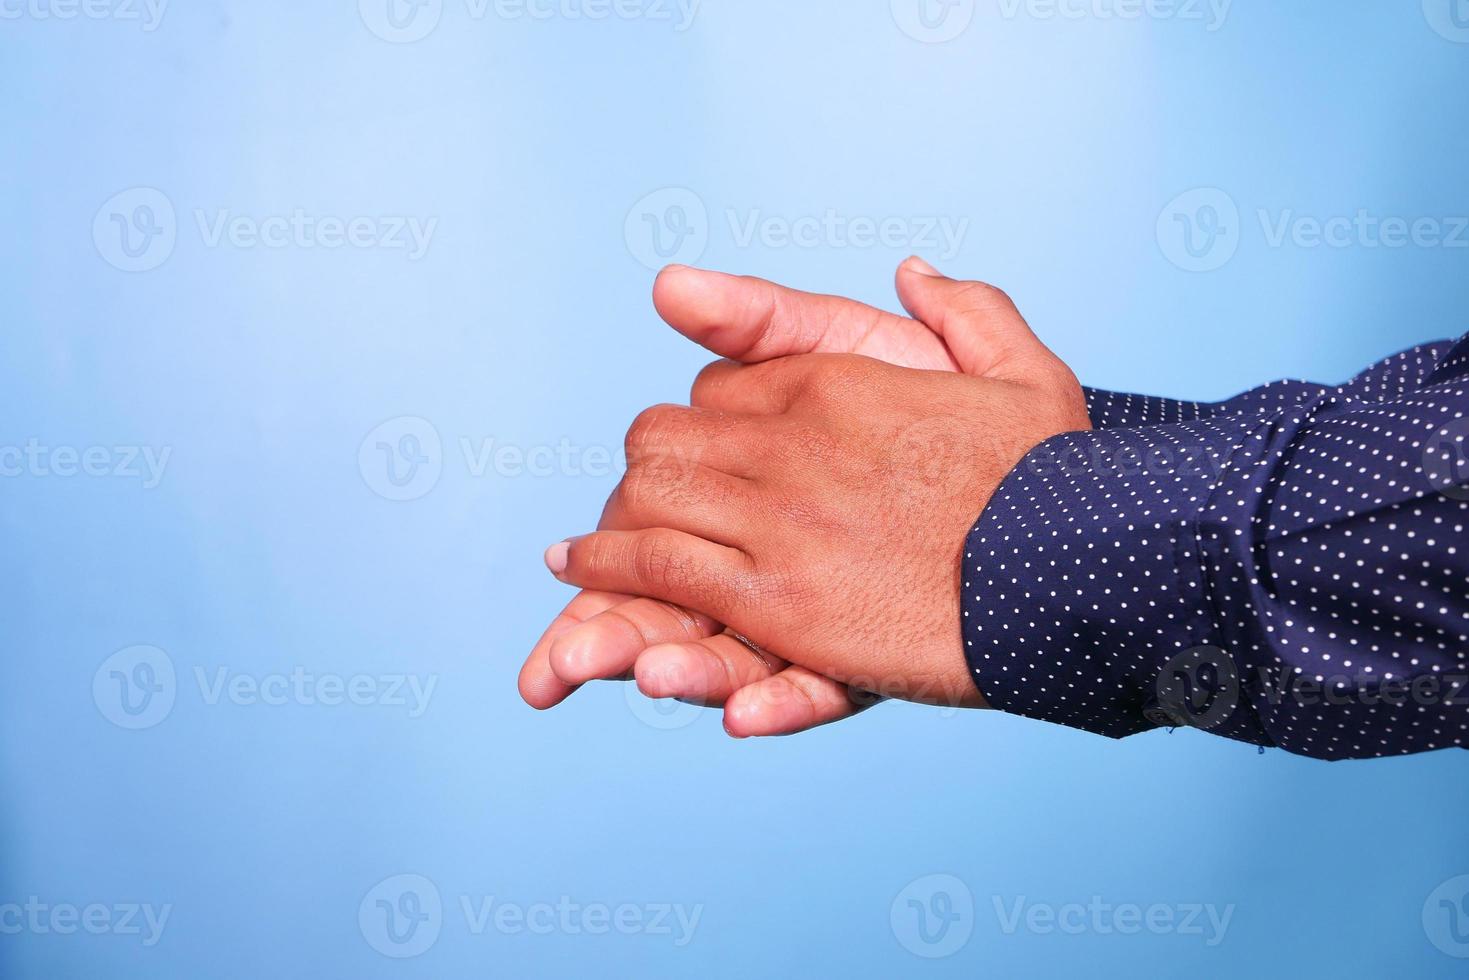 strofinando le mani insieme su sfondo blu foto